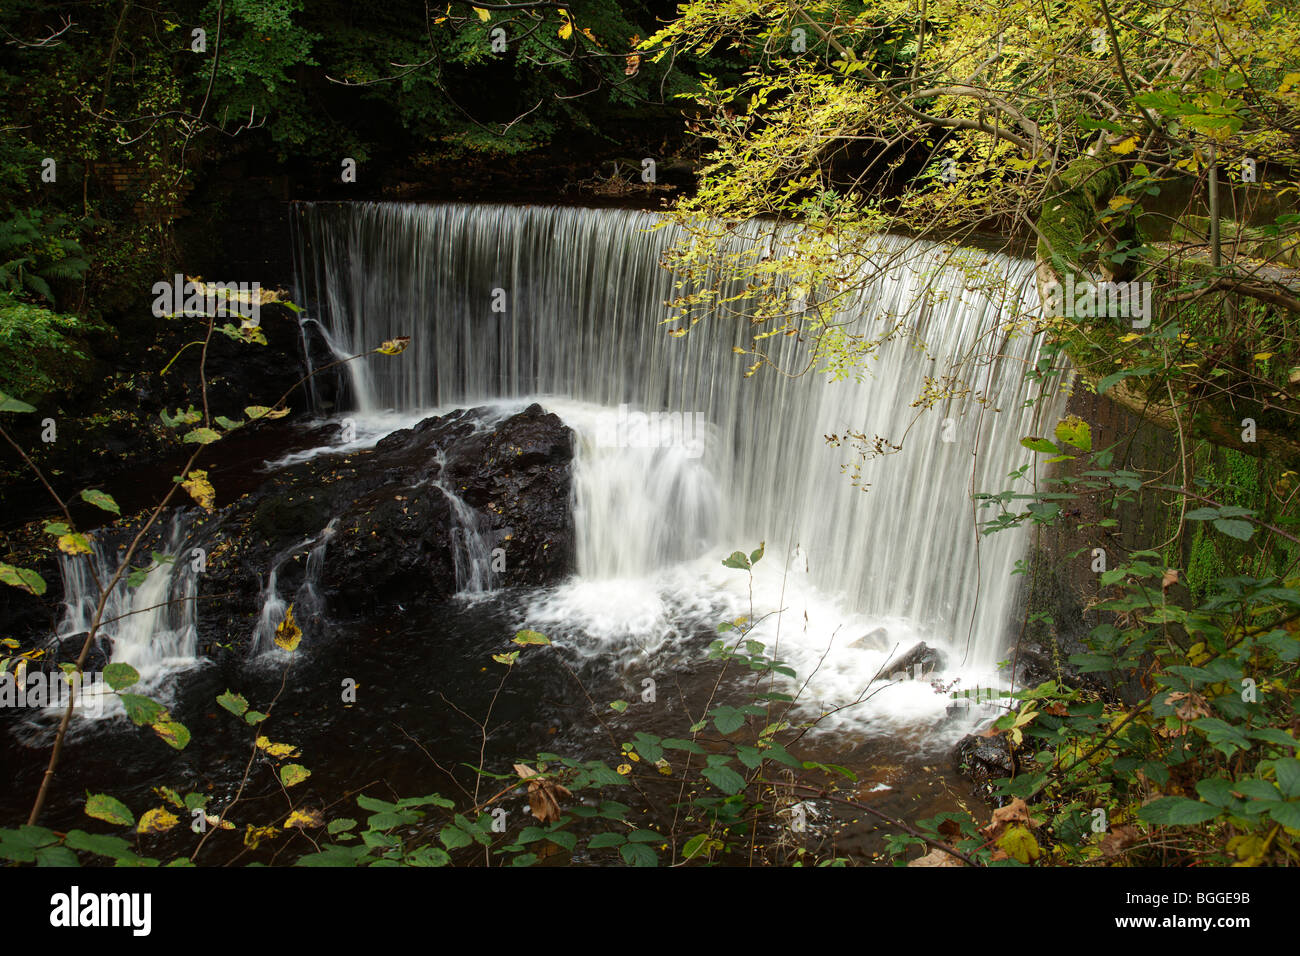 A waterfall on the River Calder, Lochwinnoch Renfrewshire Scotland UK Stock Photo